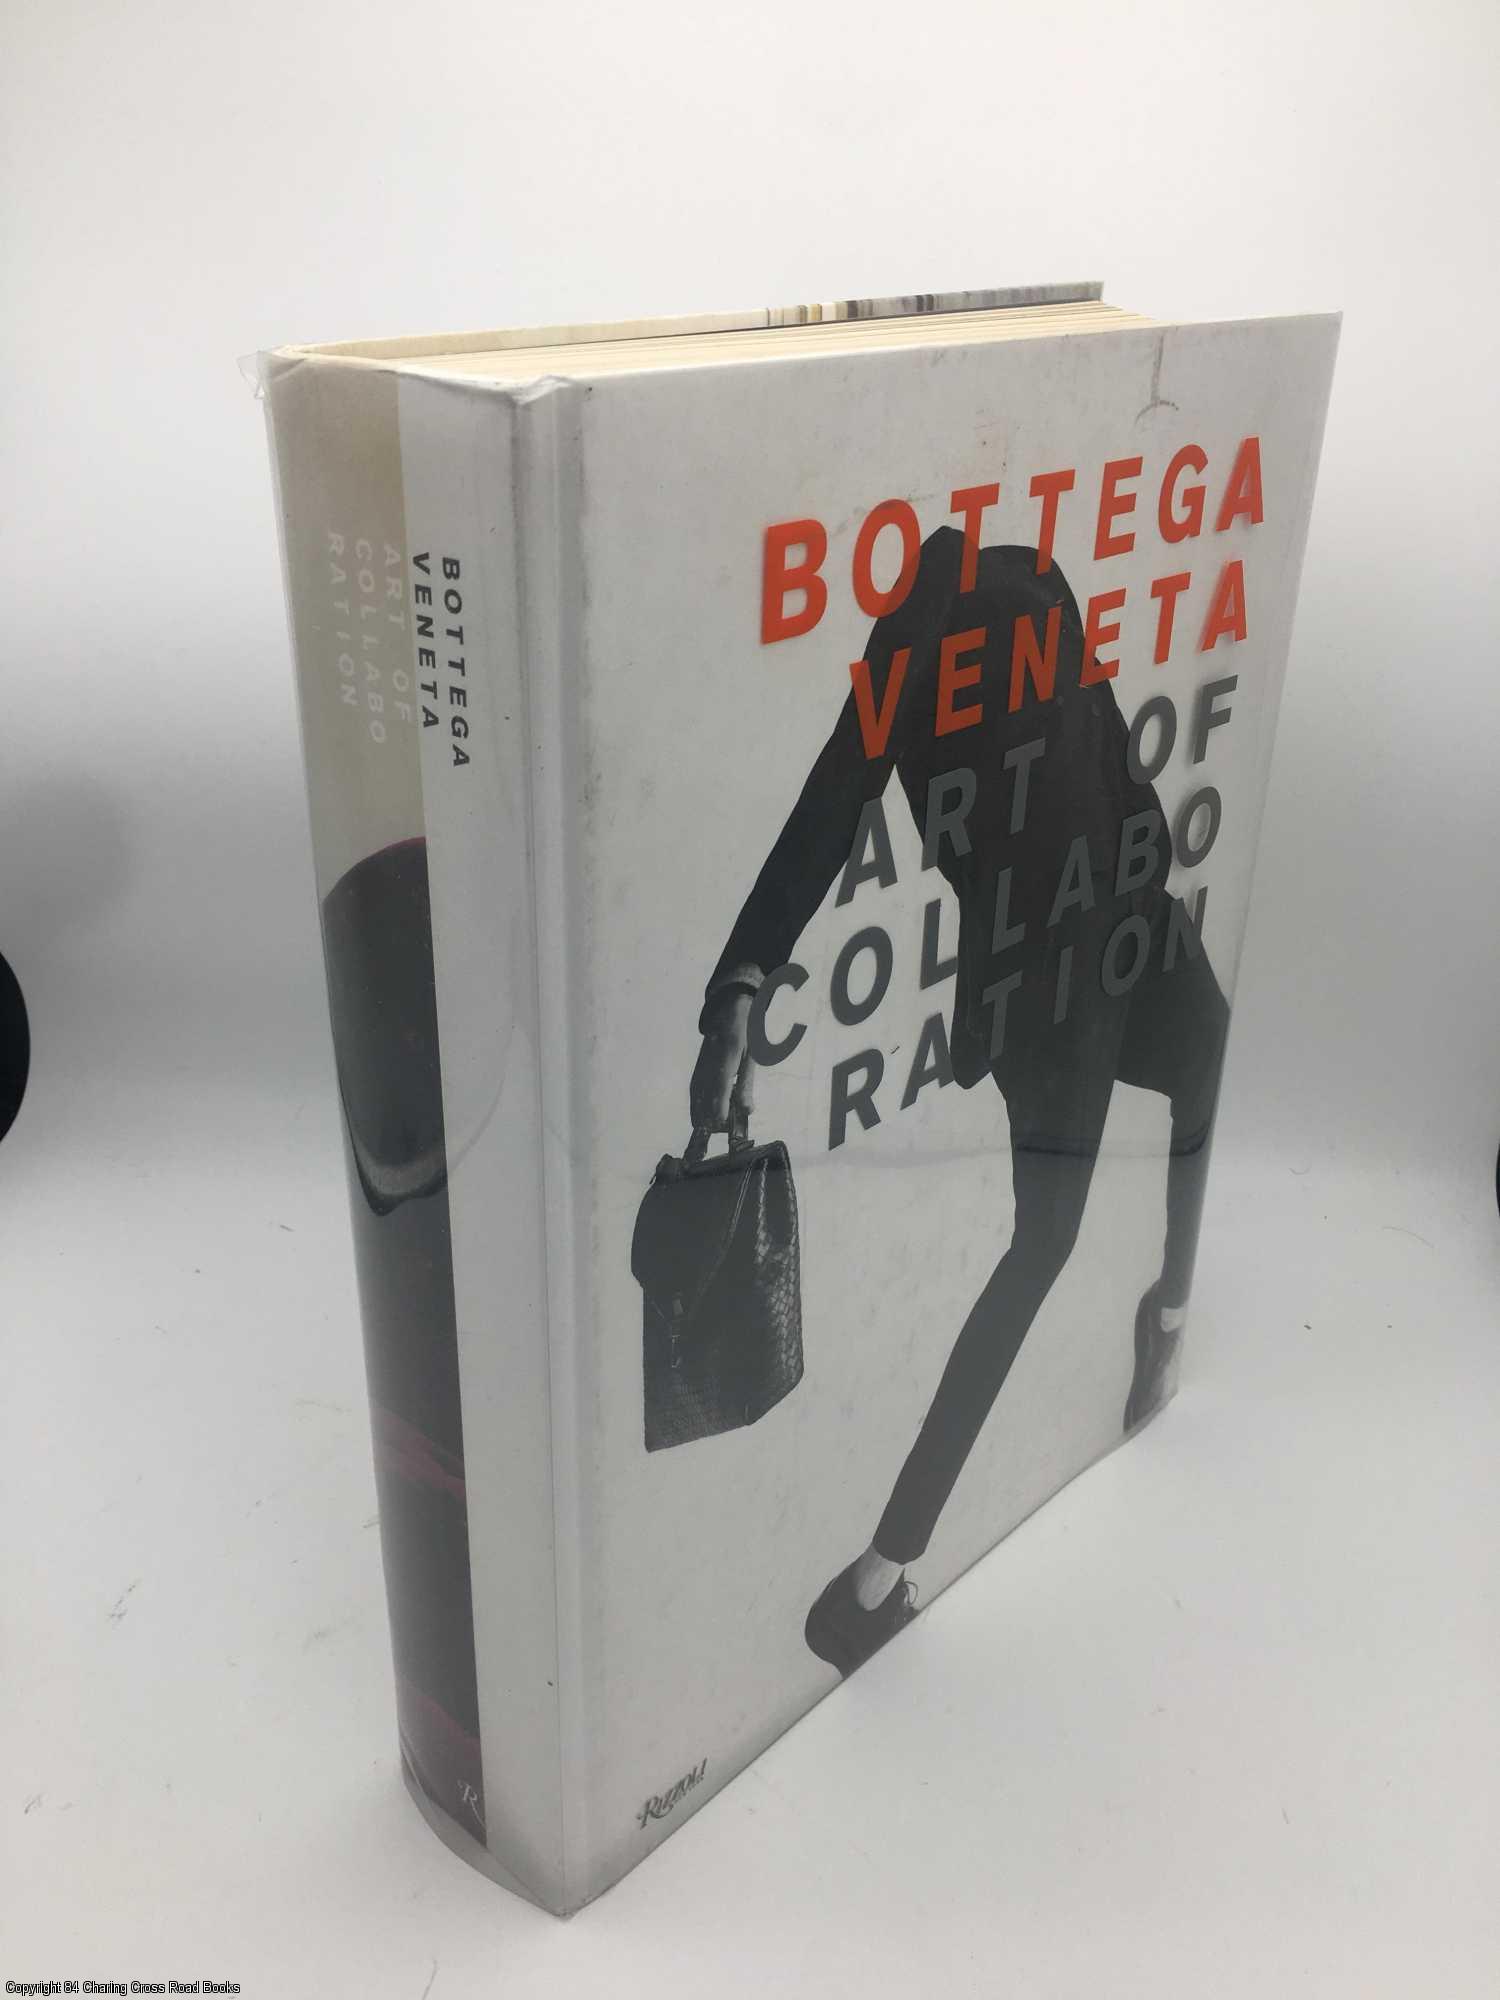 Bottega Veneta: Art of Collaboration by Tomas Maier on 84 Charing Cross  Rare Books